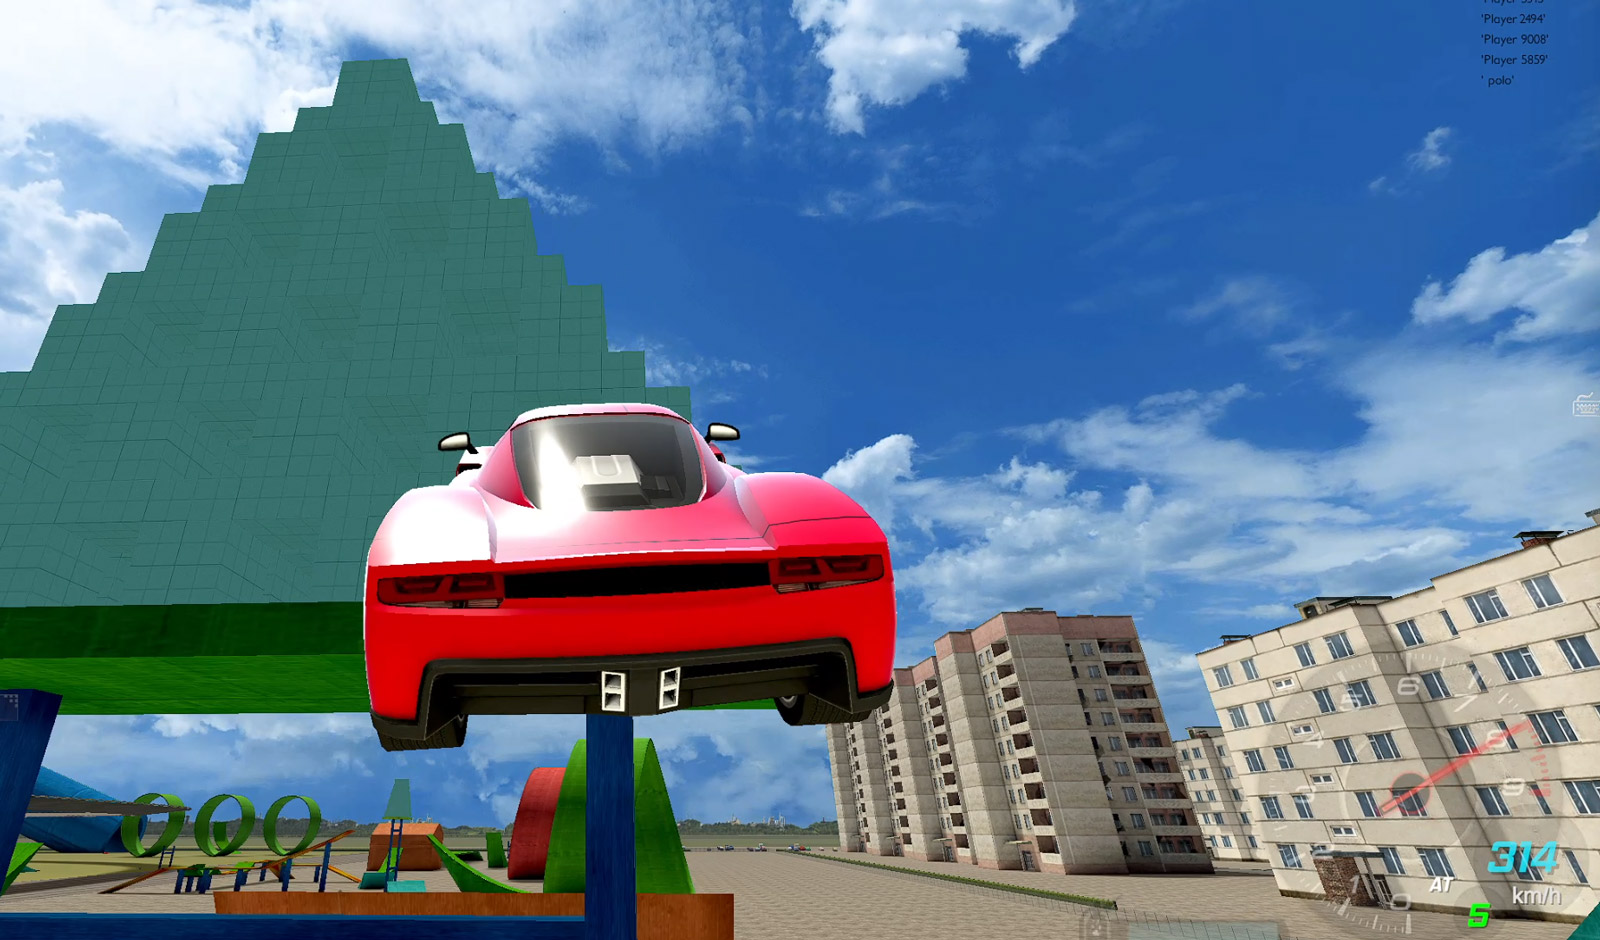 Play Madalin Stunt Cars 2